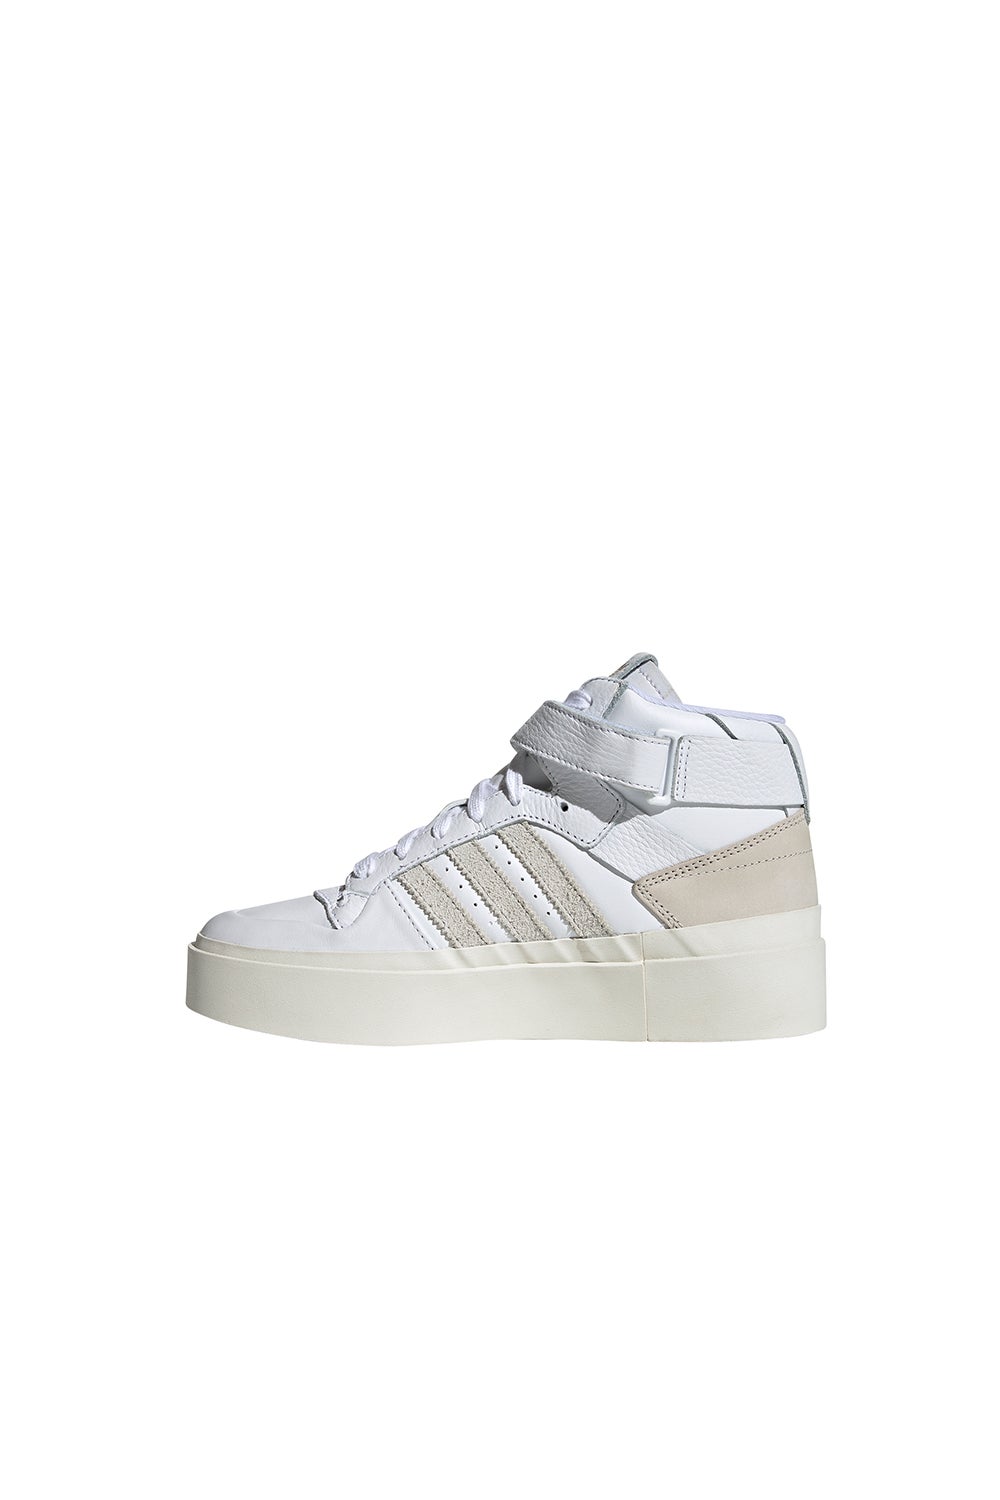 adidas Forum Bonega Mid W Shoes Cloud White/Orbit Grey